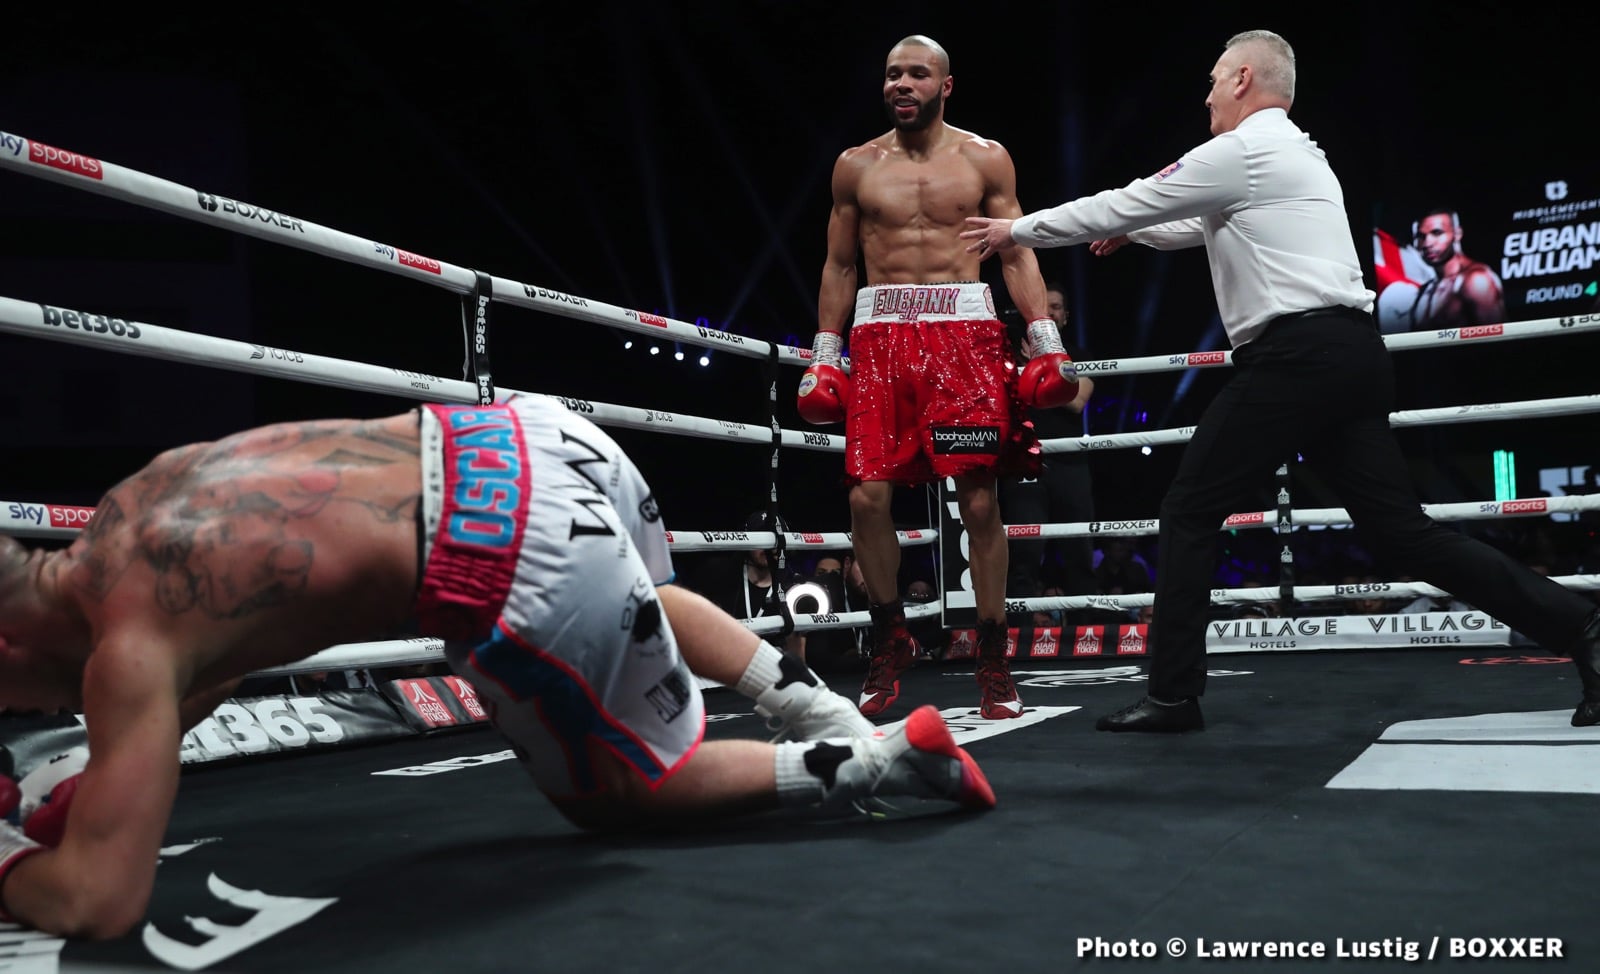 Chris Eubank Jr boxing image / photo